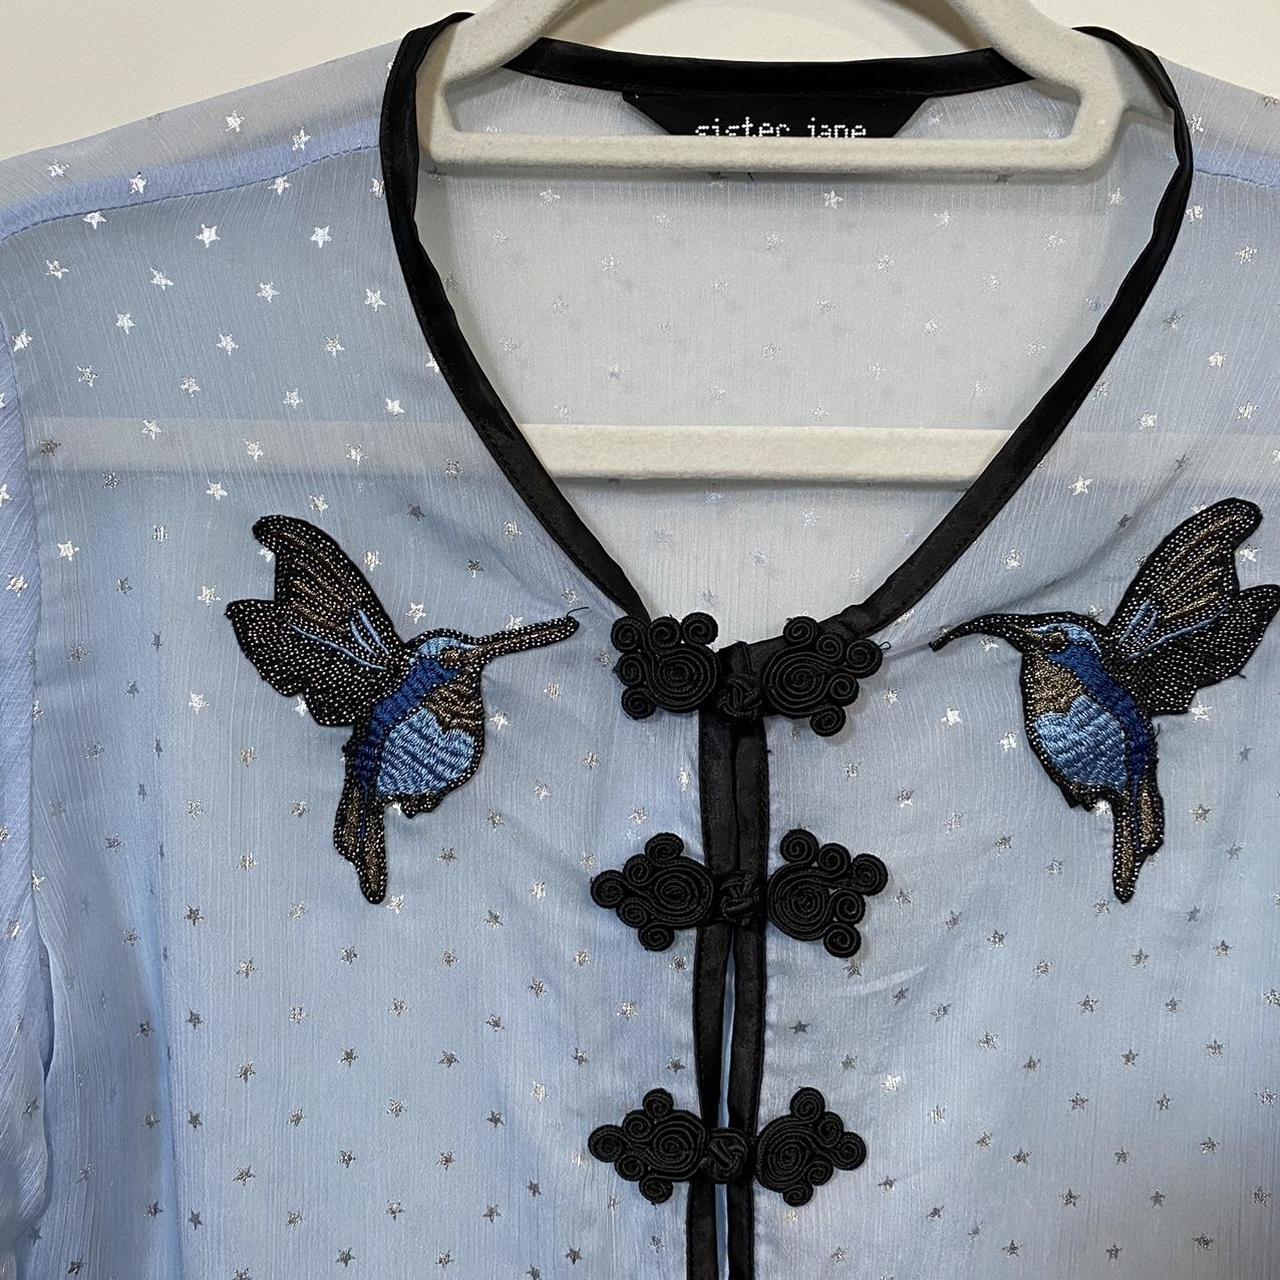 Product Image 2 - Sister Jane hummingbird shirt
This top